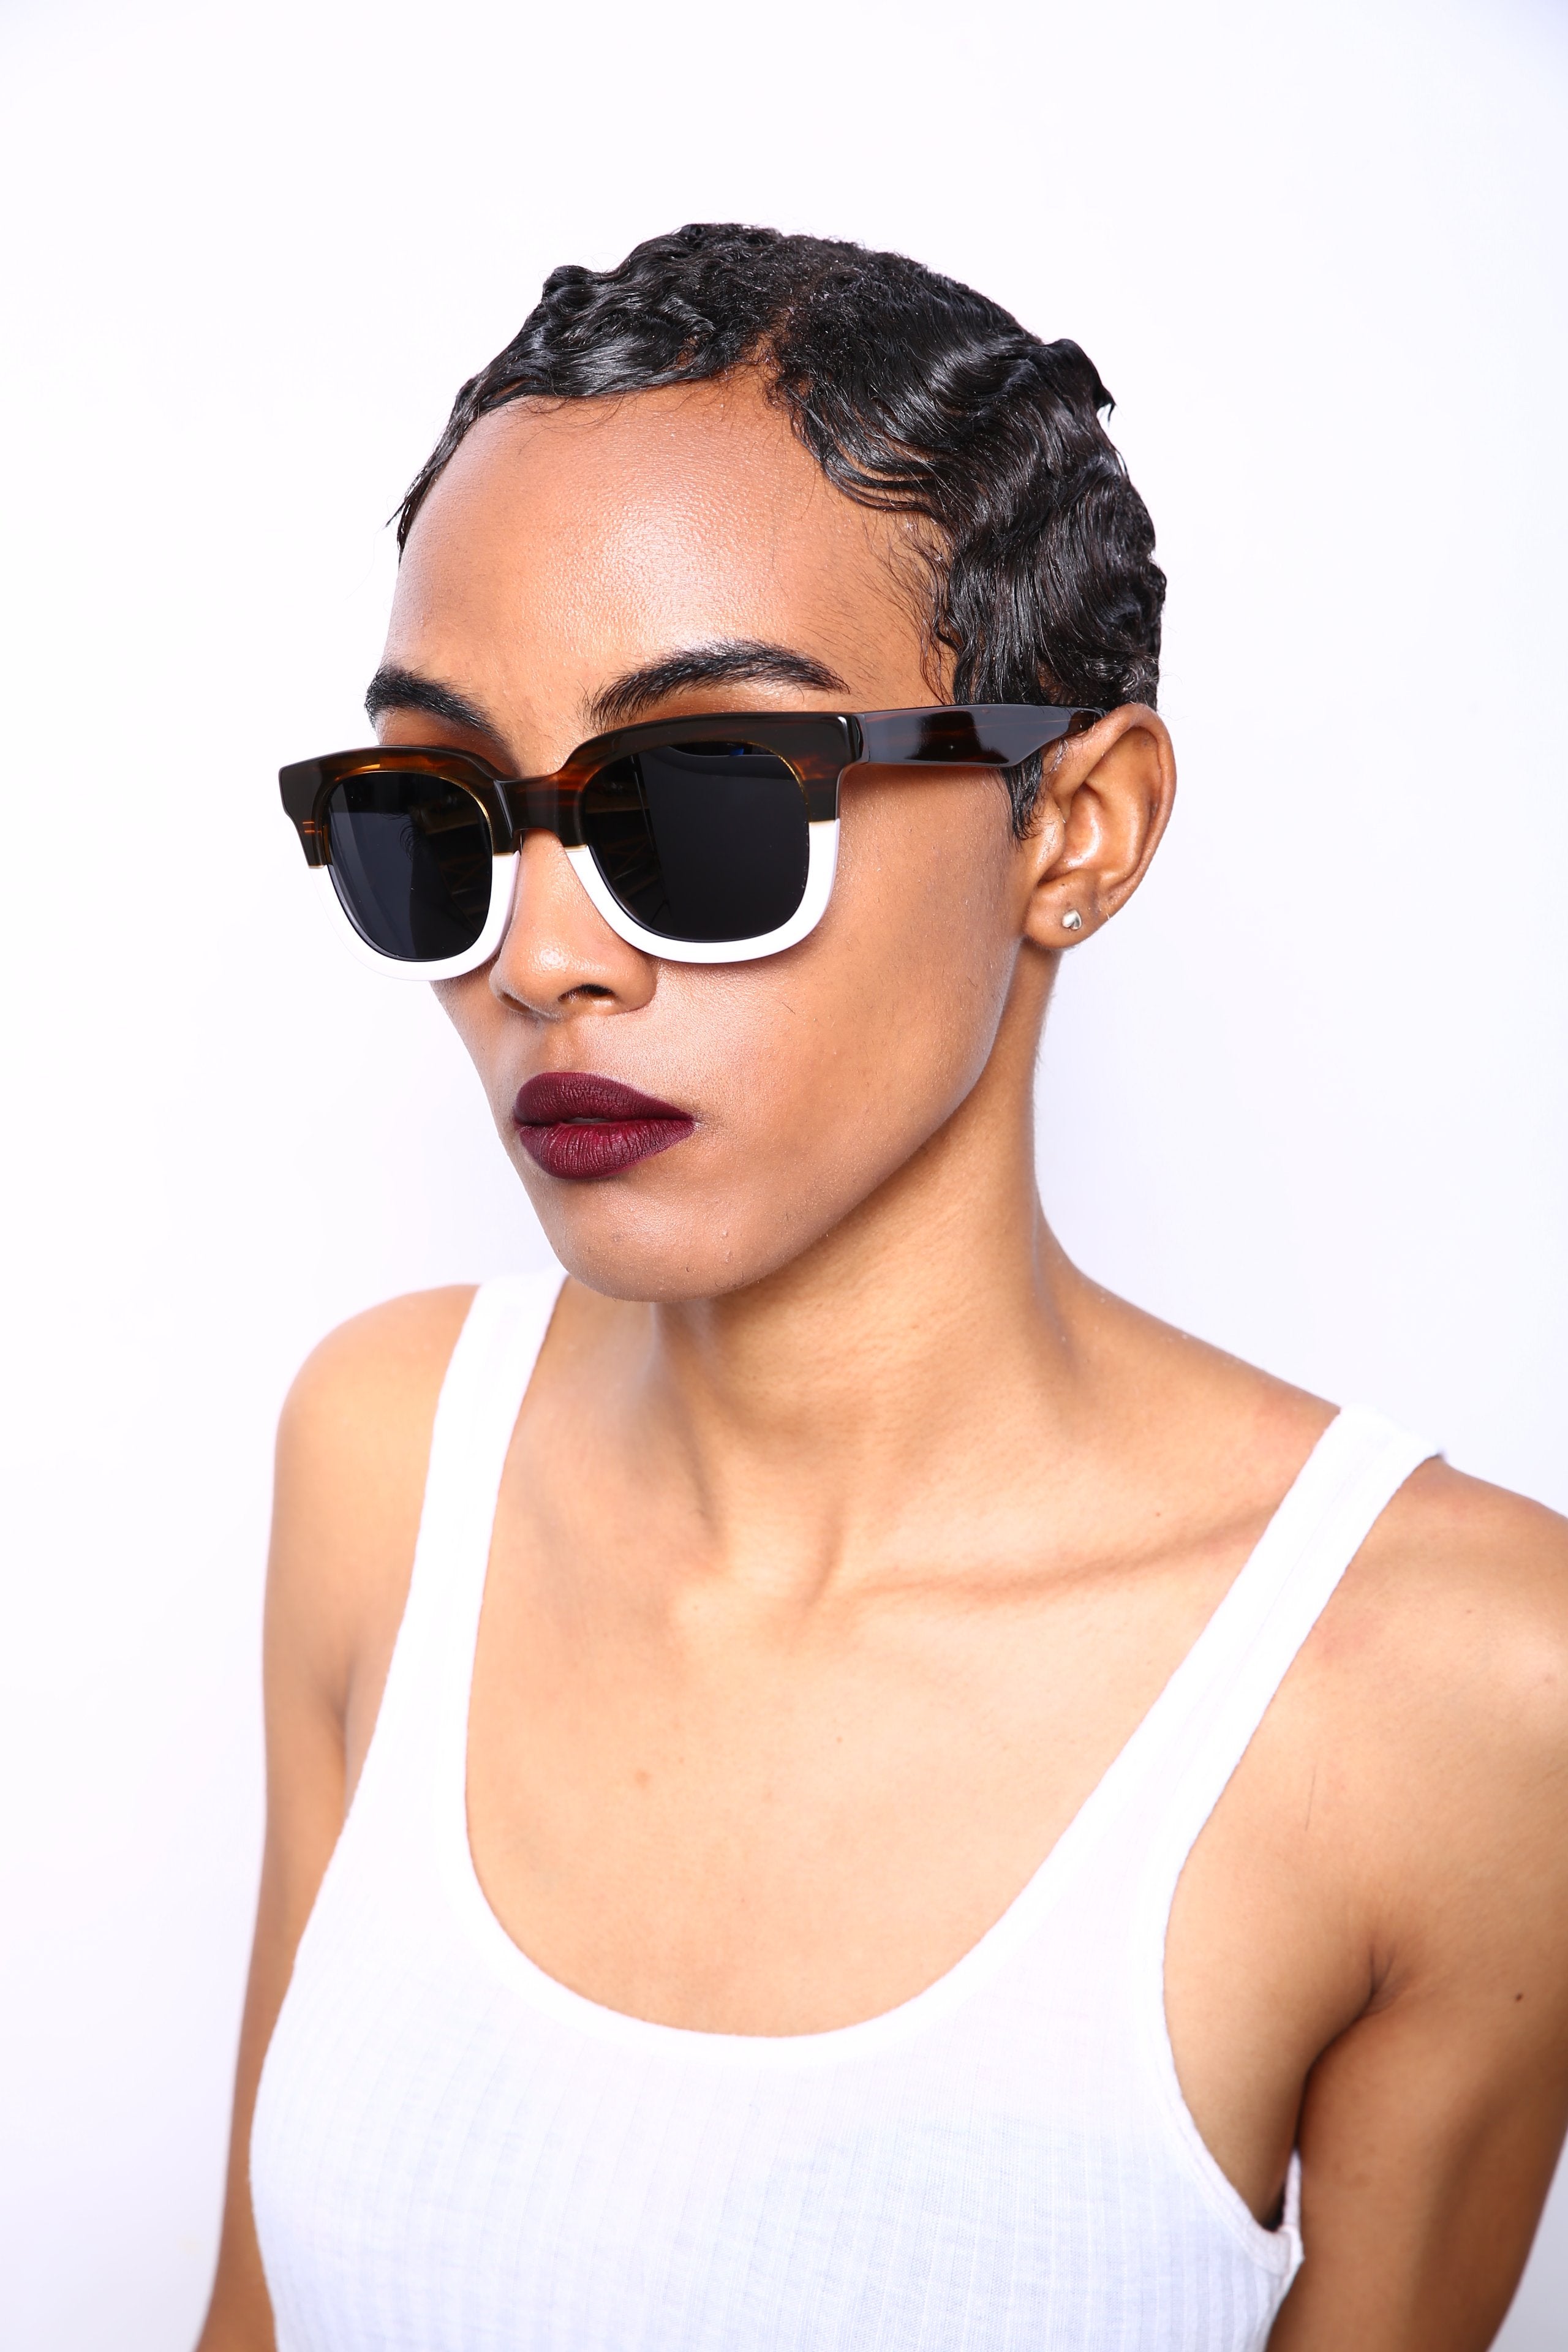 Polarized Manhattan Horn Rimmed Fashion Sunglasses Brown White-Samba Shades